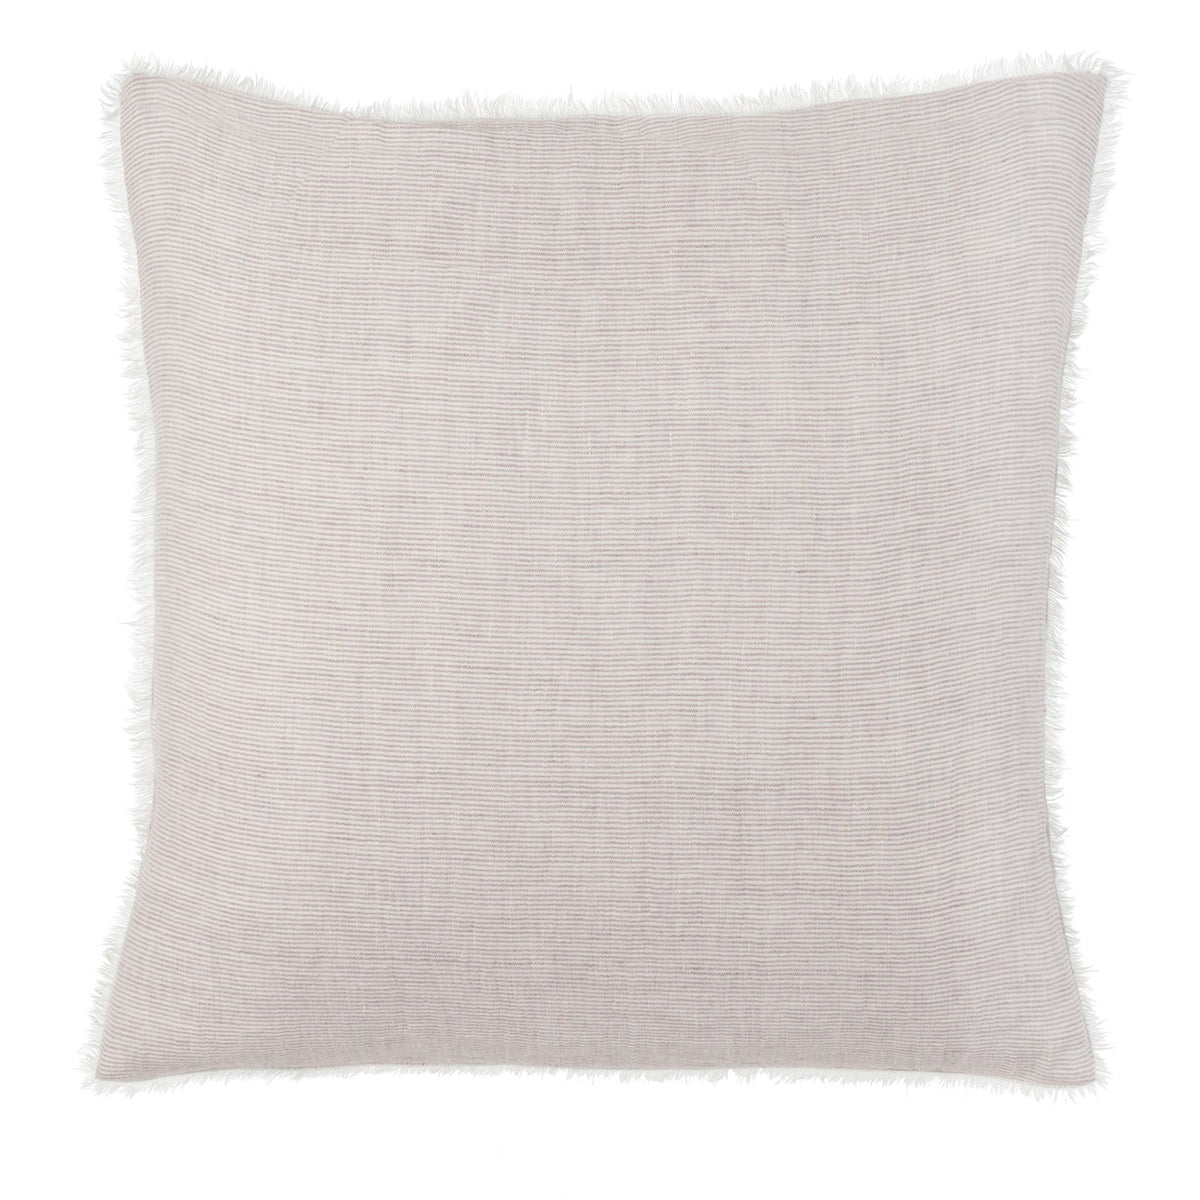 Lina grey stripe pillow